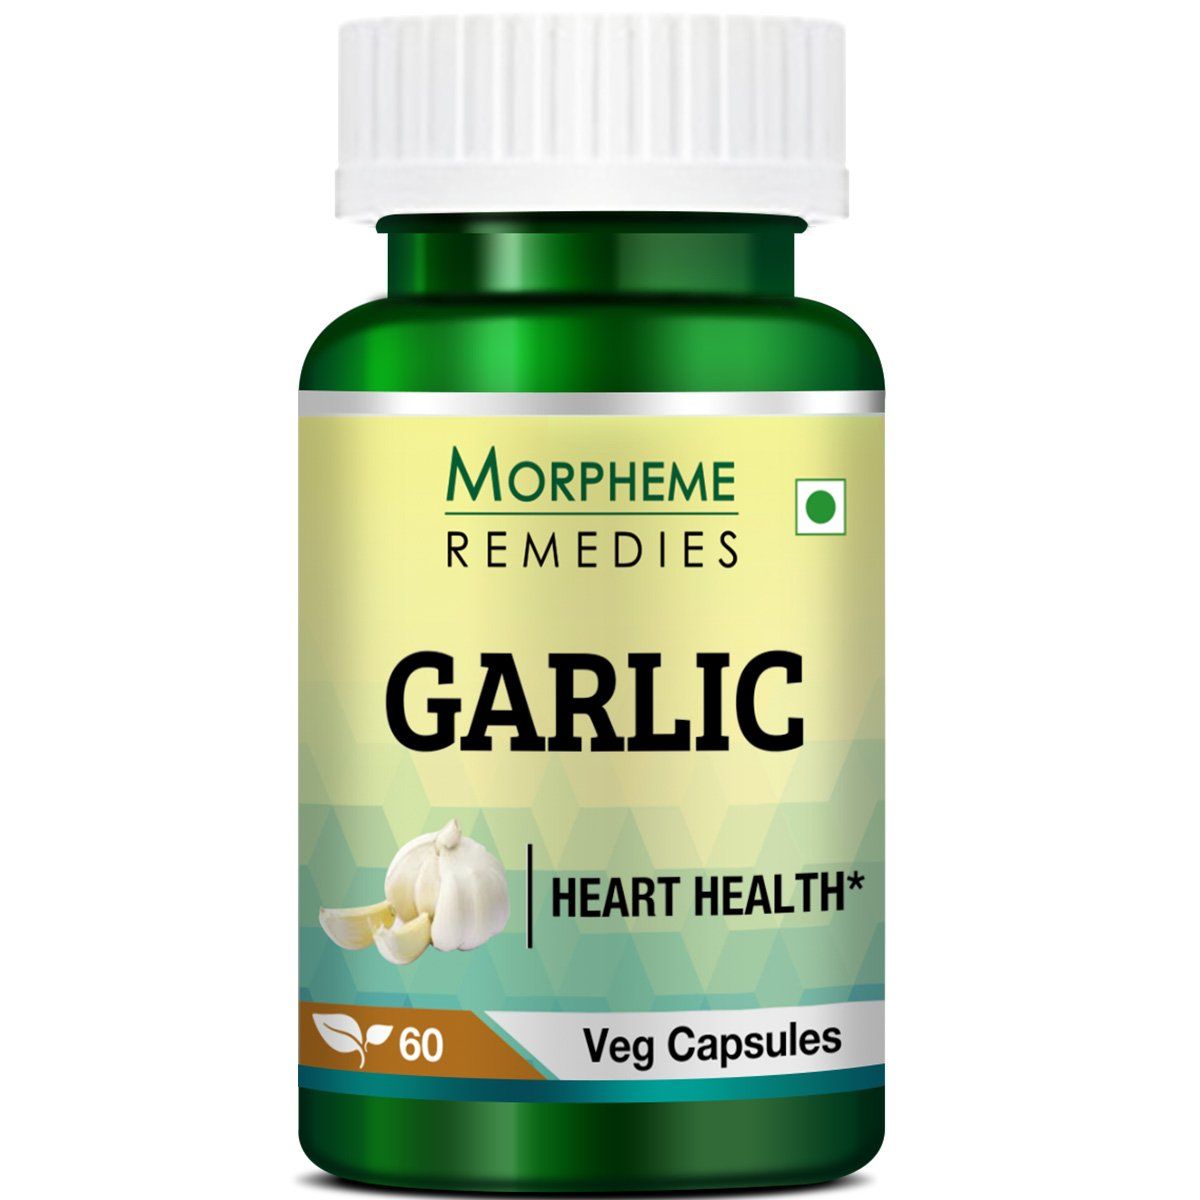 Morpheme Remedies Garlic Capsules for Heart Health - 500mg Extract